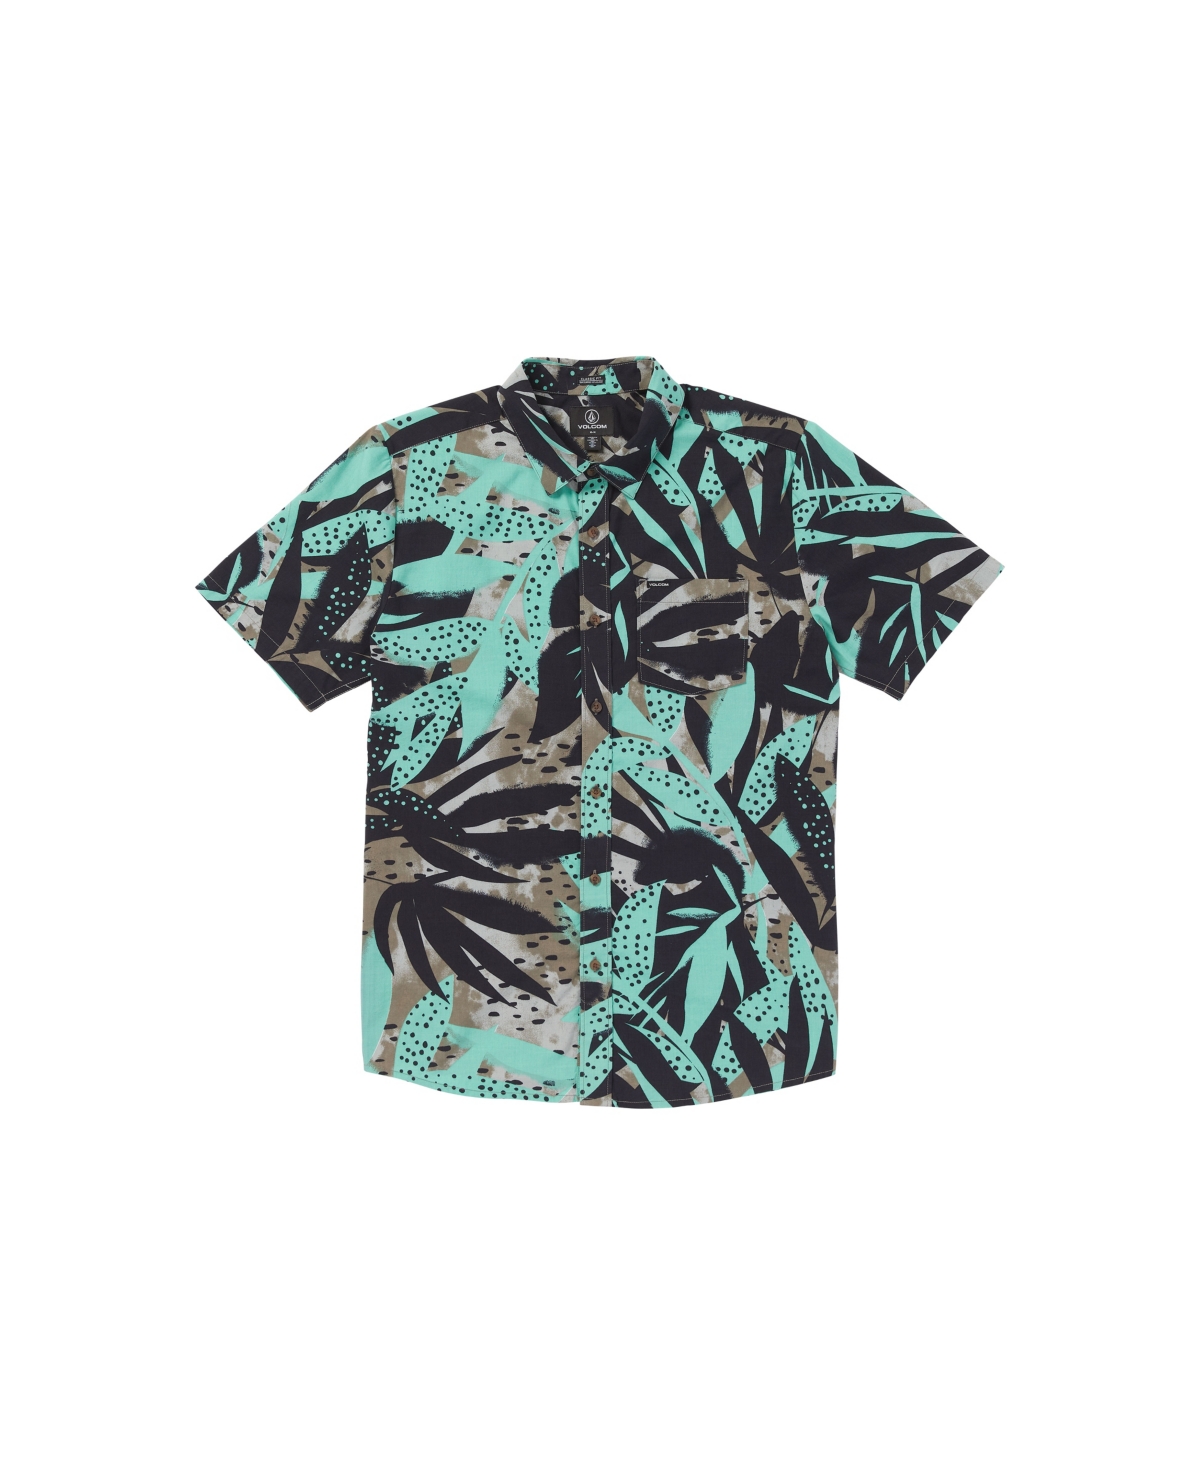 Waterside Floral Short Sleeve Shirt - Dusty Aqua